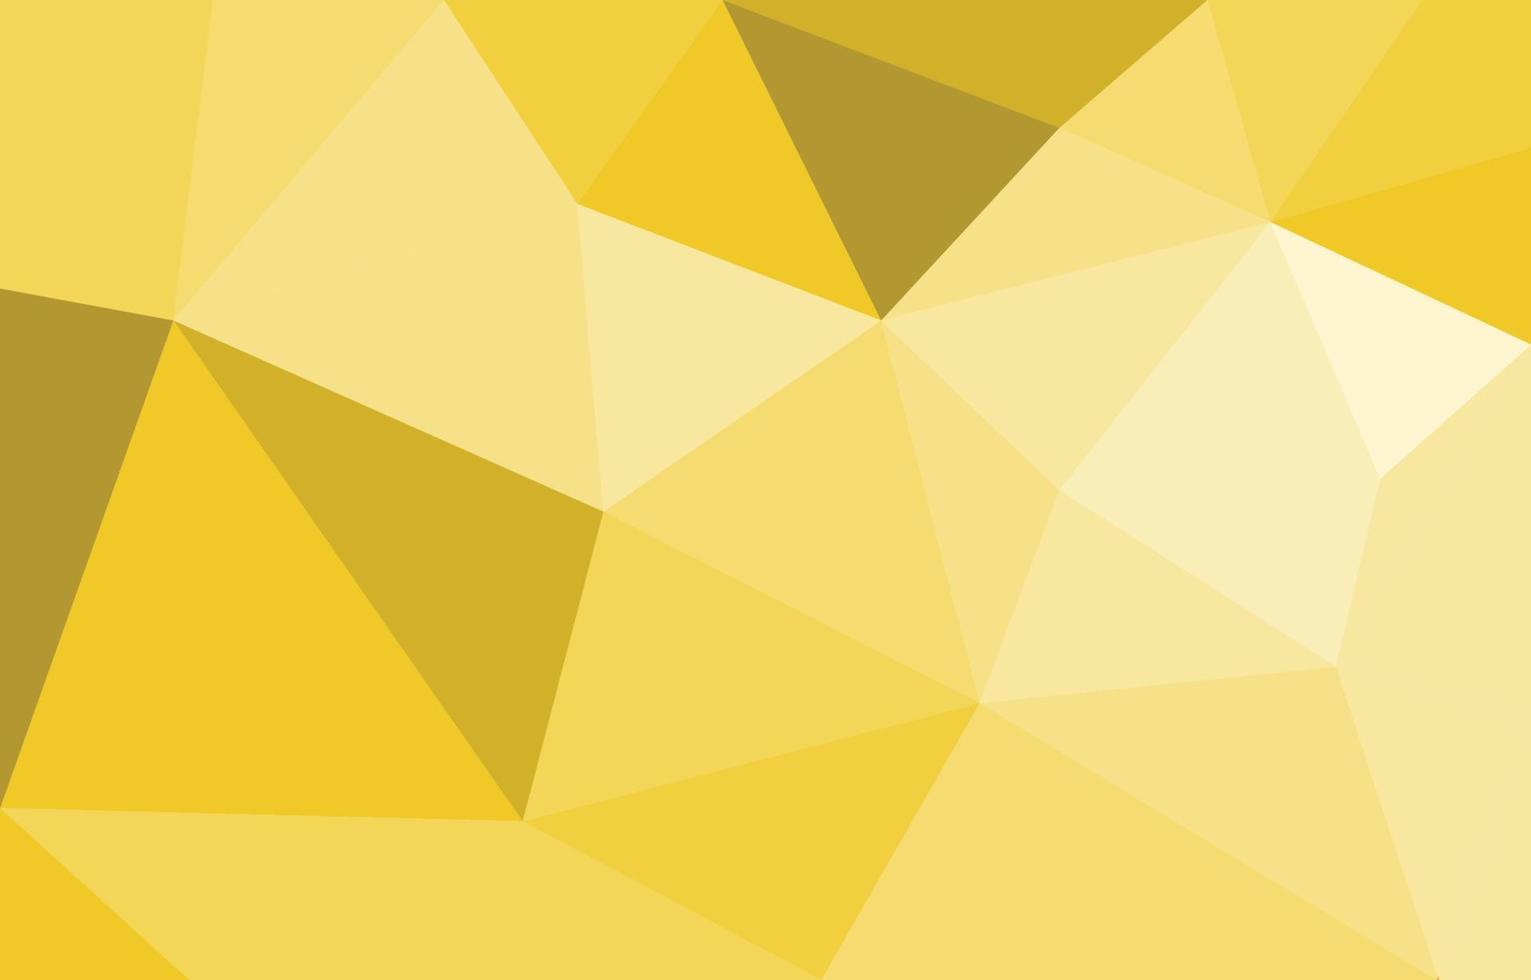 fundo abstrato da forma de triângulo geométrico de baixo polígono amarelo brilhante, ilustração vetorial, estilo minimalista vetor